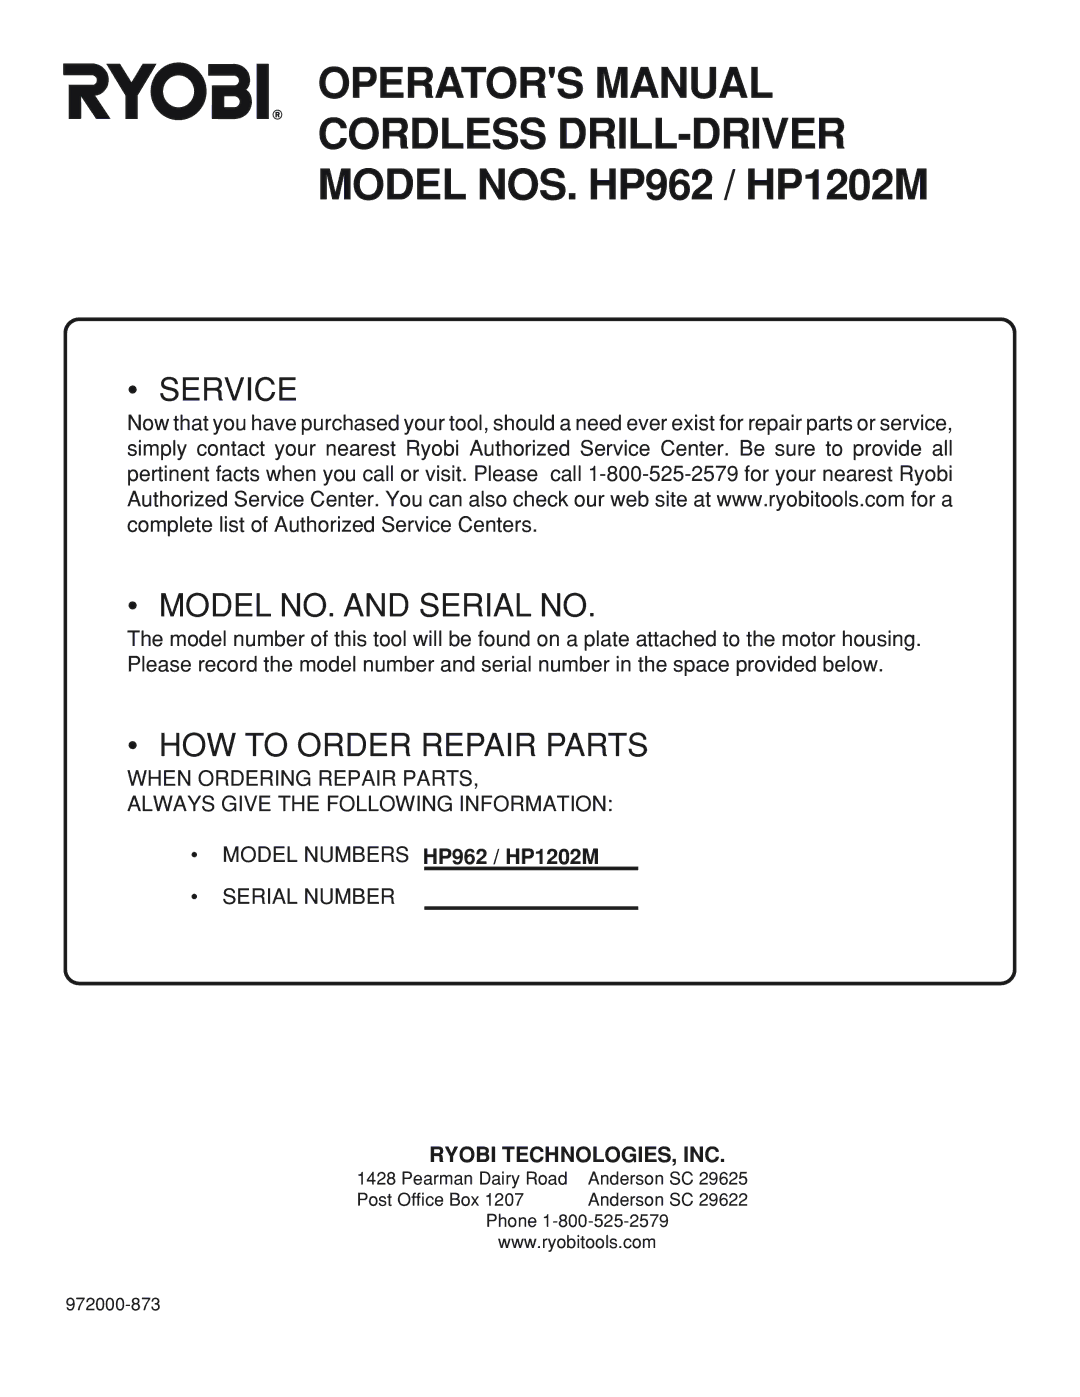 Ryobi manual Model Numbers HP962 / HP1202M, Ryobi TECHNOLOGIES, INC 